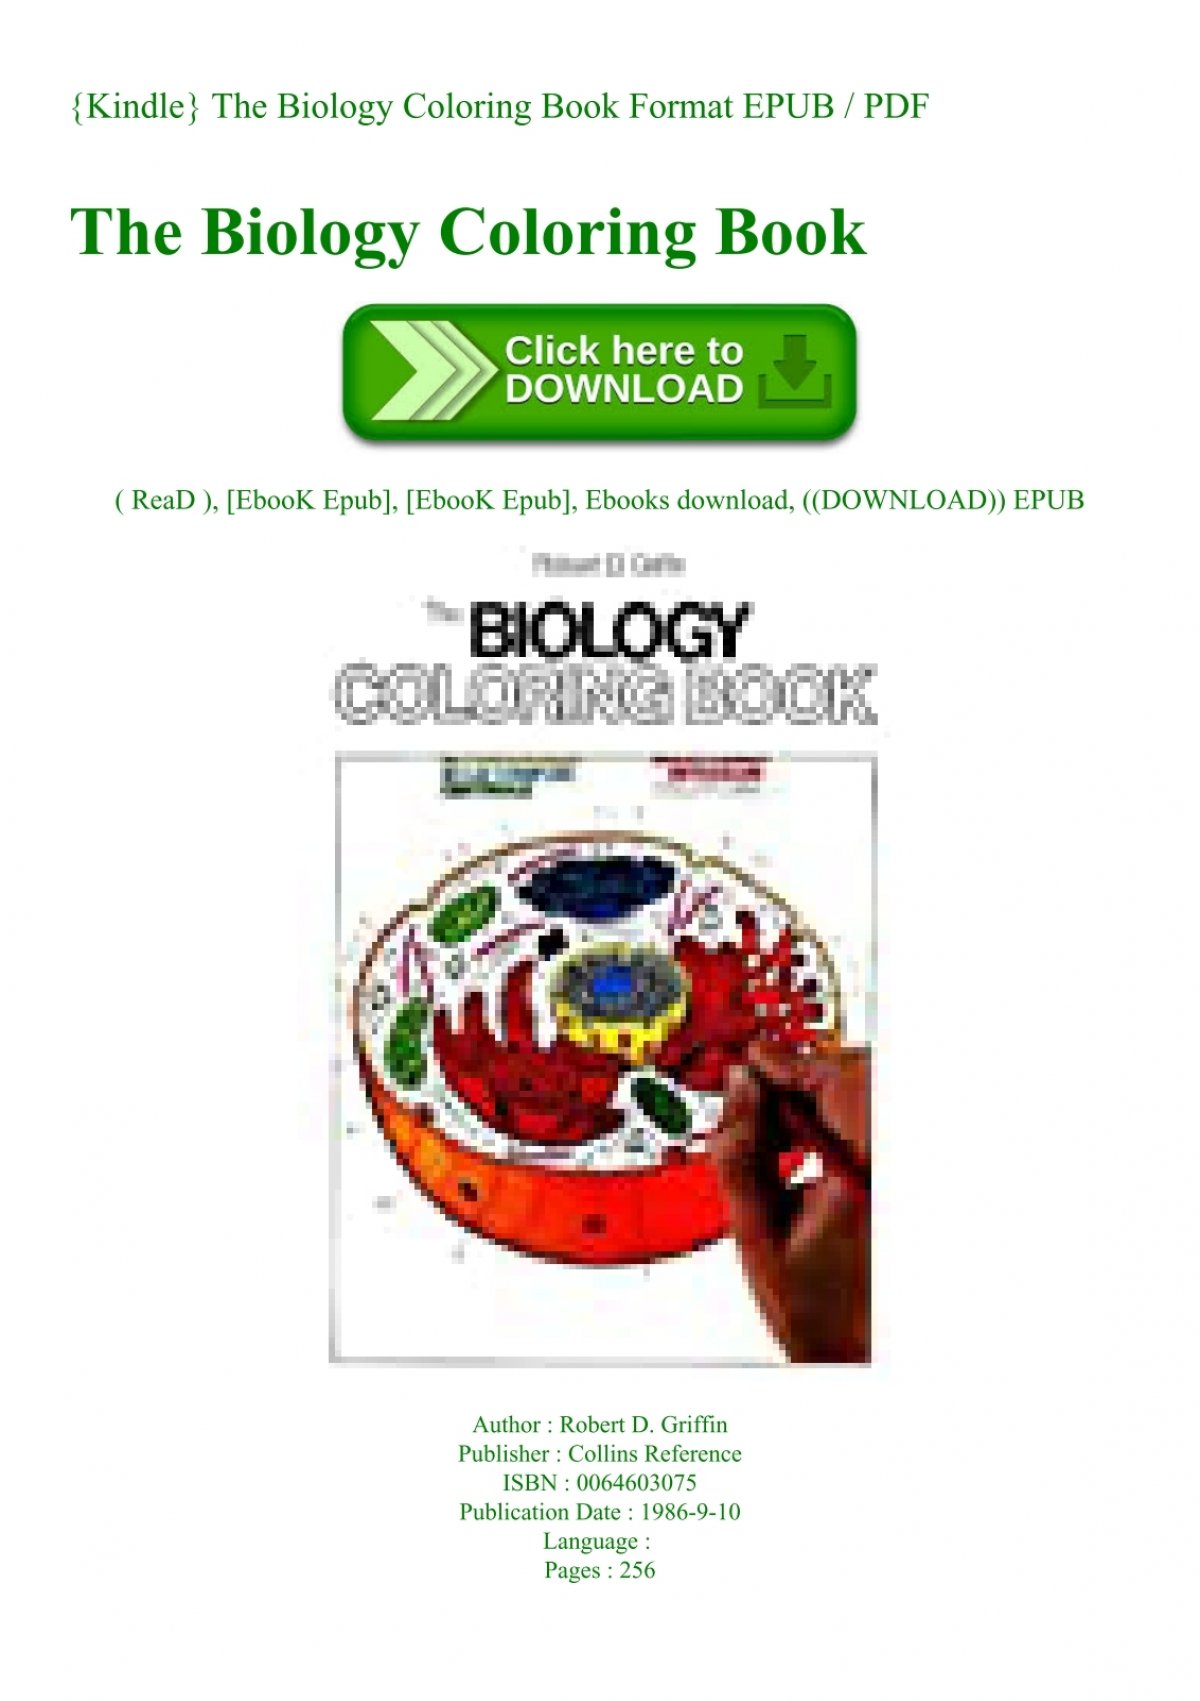 Download Kindle The Biology Coloring Book Format Epub Pdf